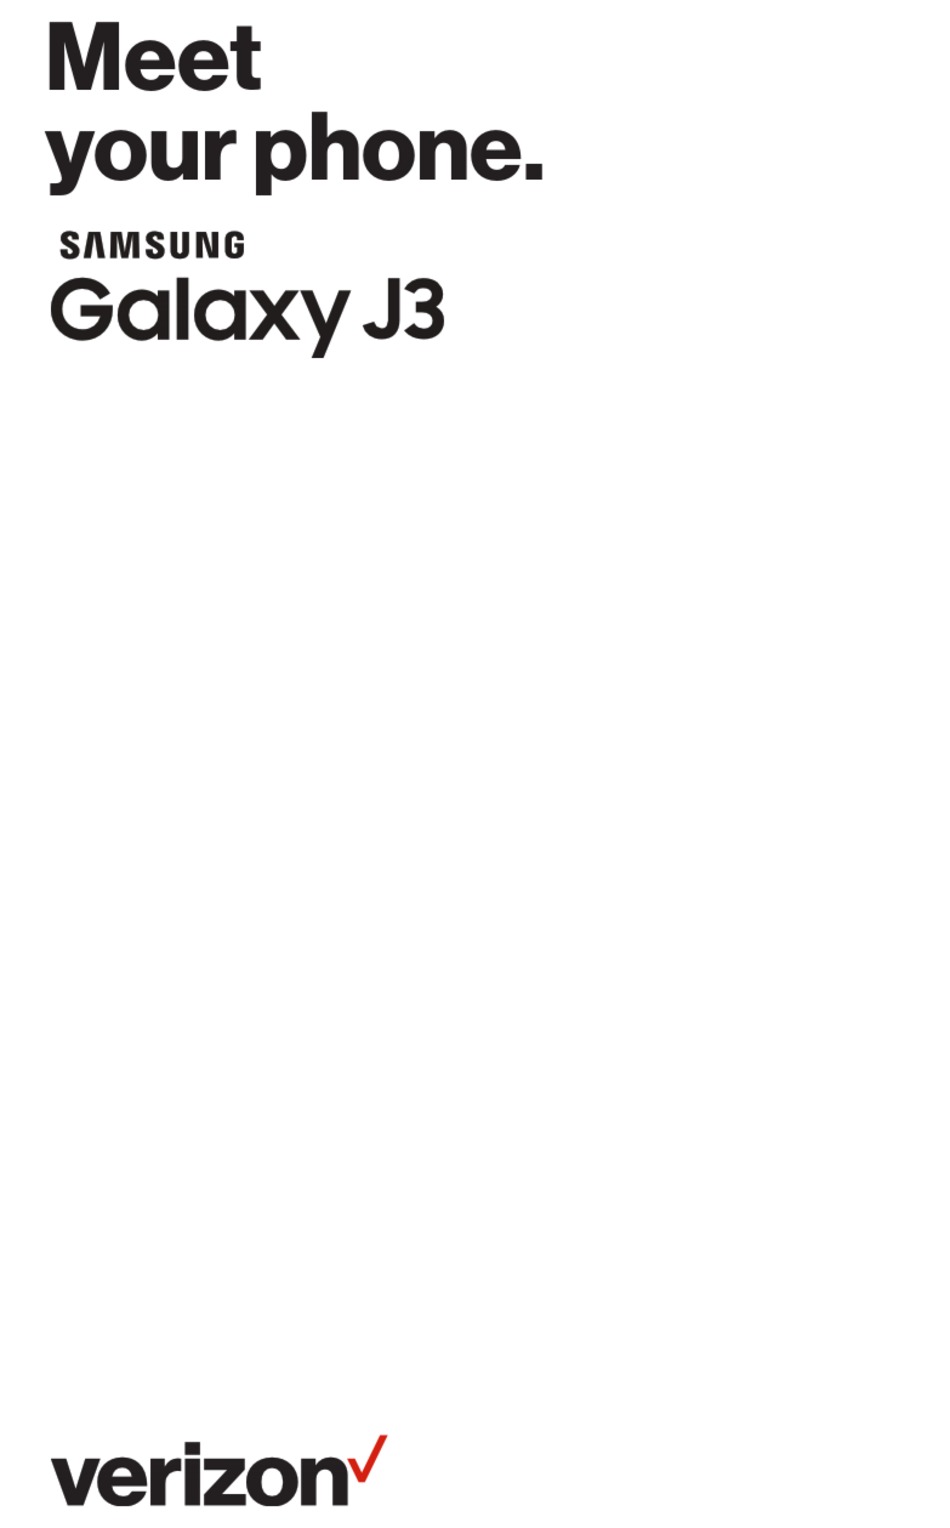 SAMSUNG GALAXY J3 MANUAL Pdf Download | ManualsLib